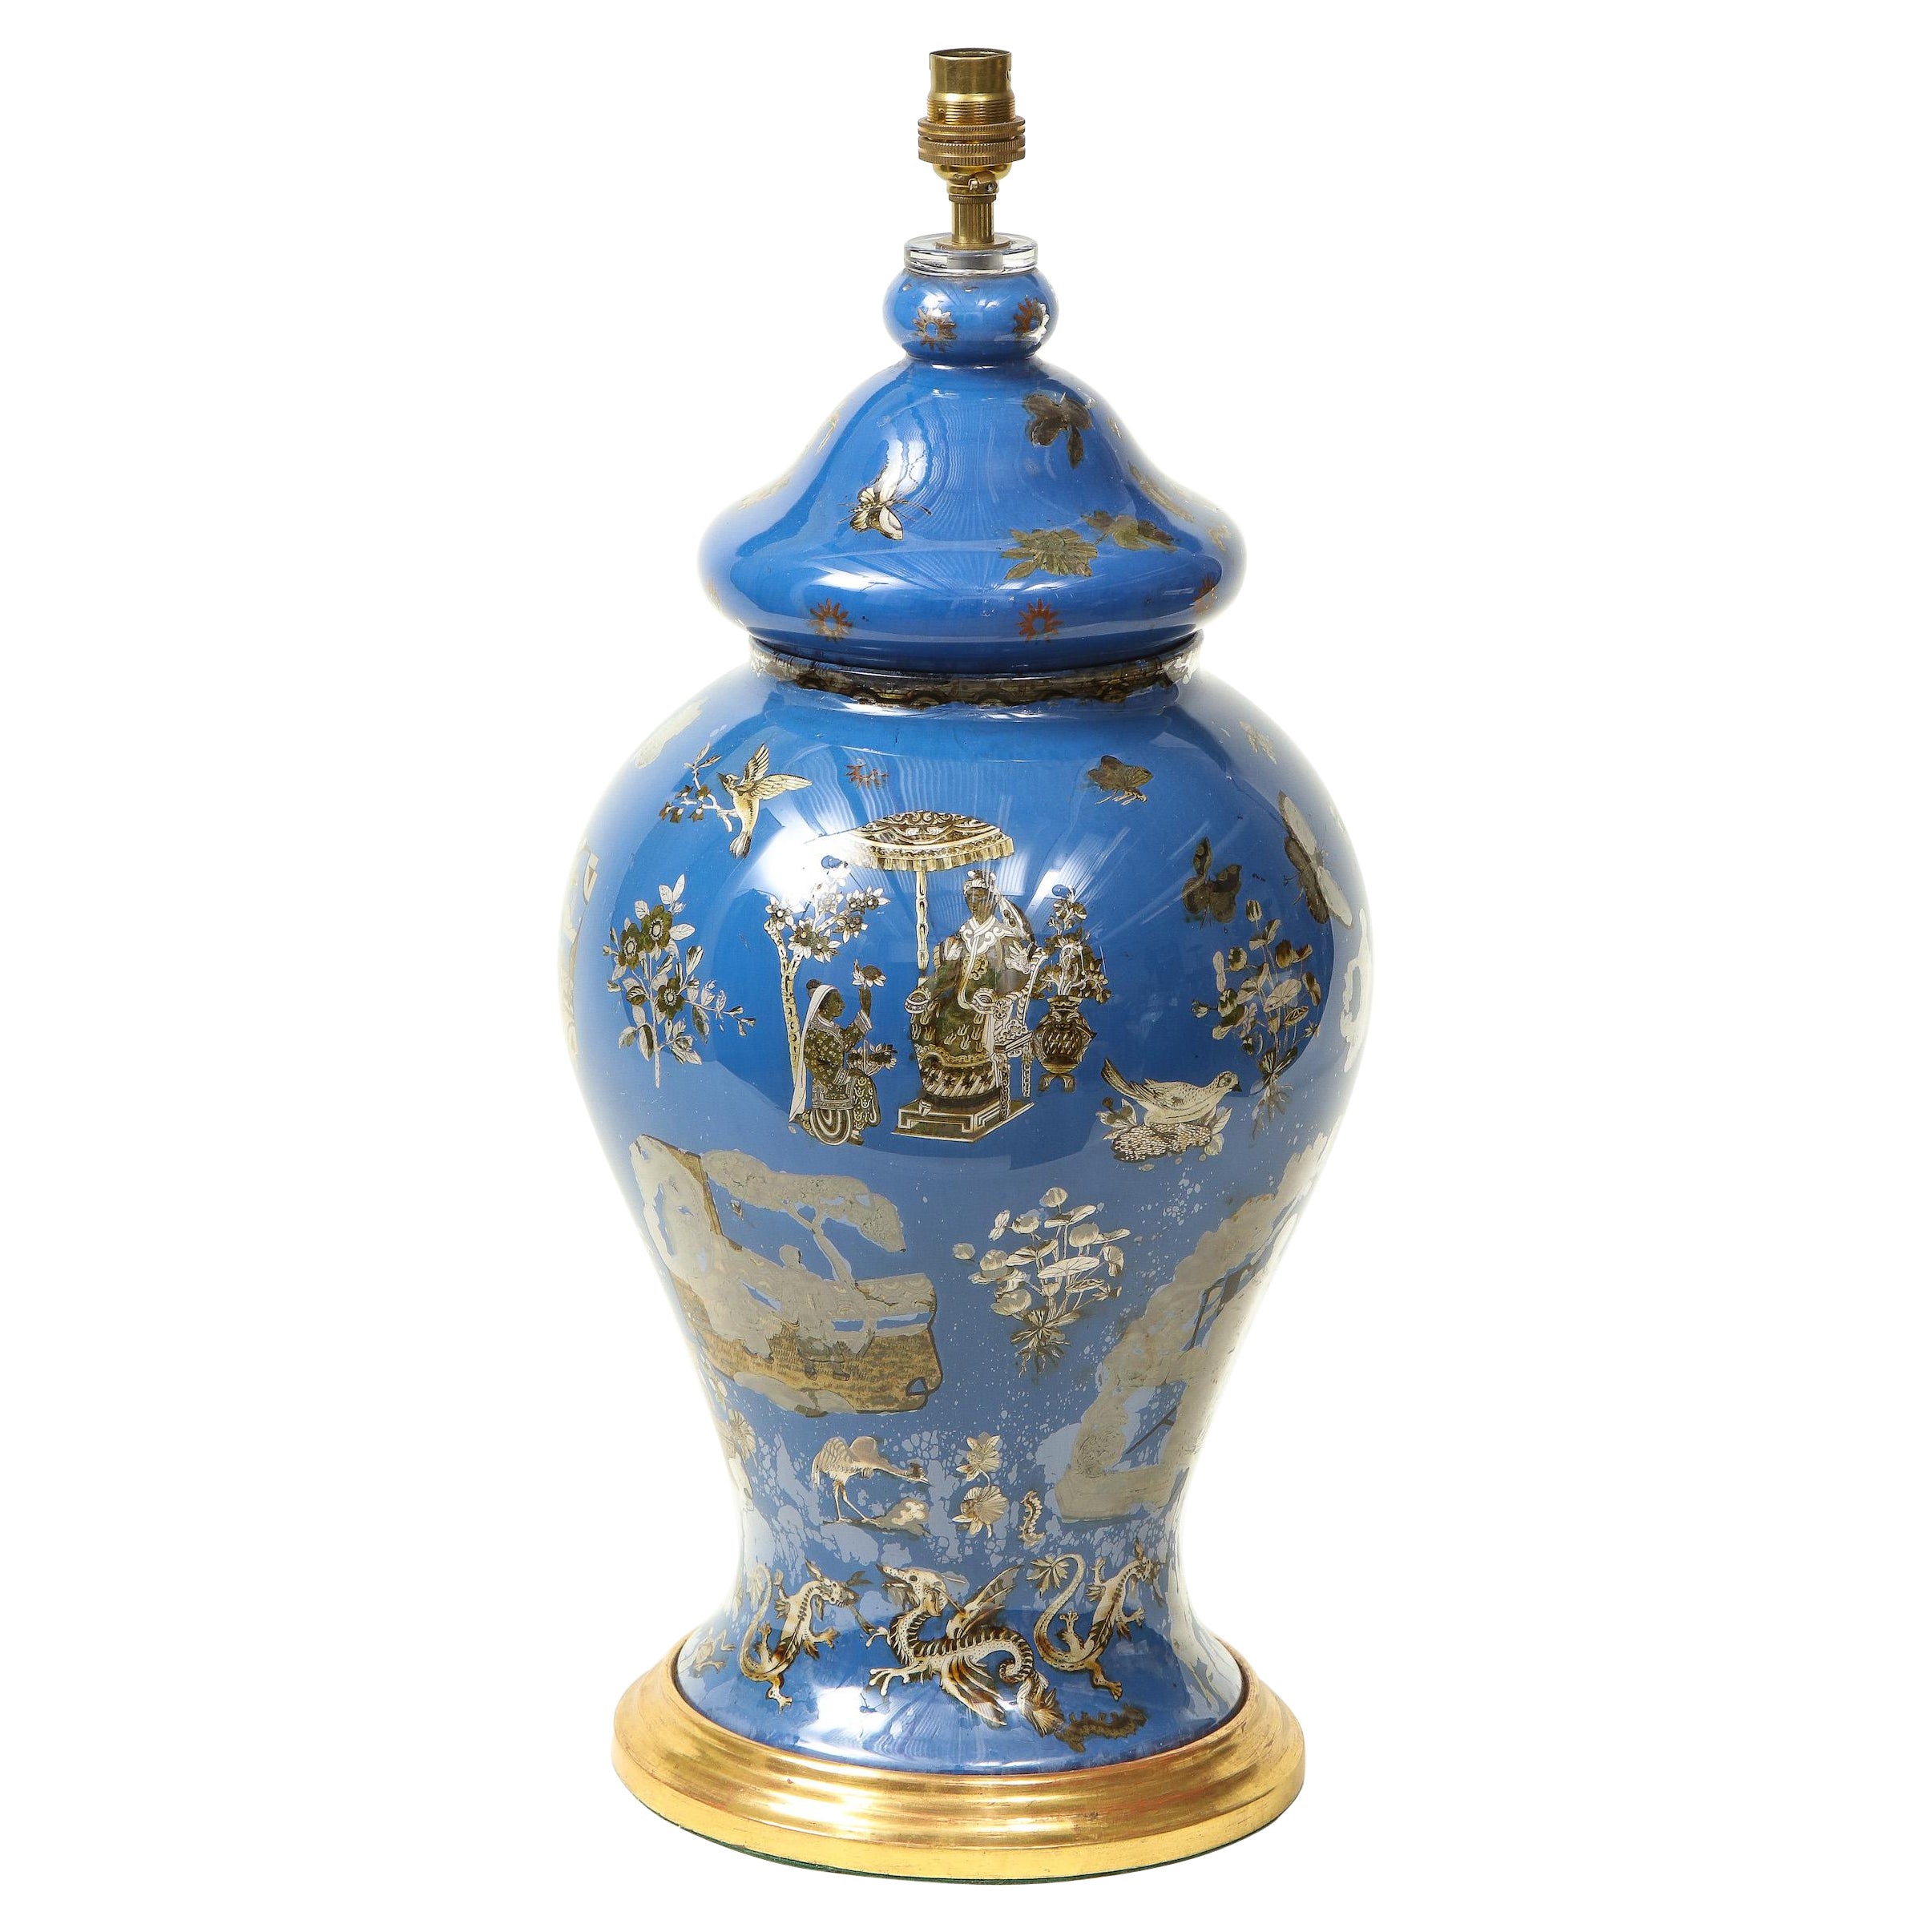 Lampe Decalcomania bleu royal style chinoiseries